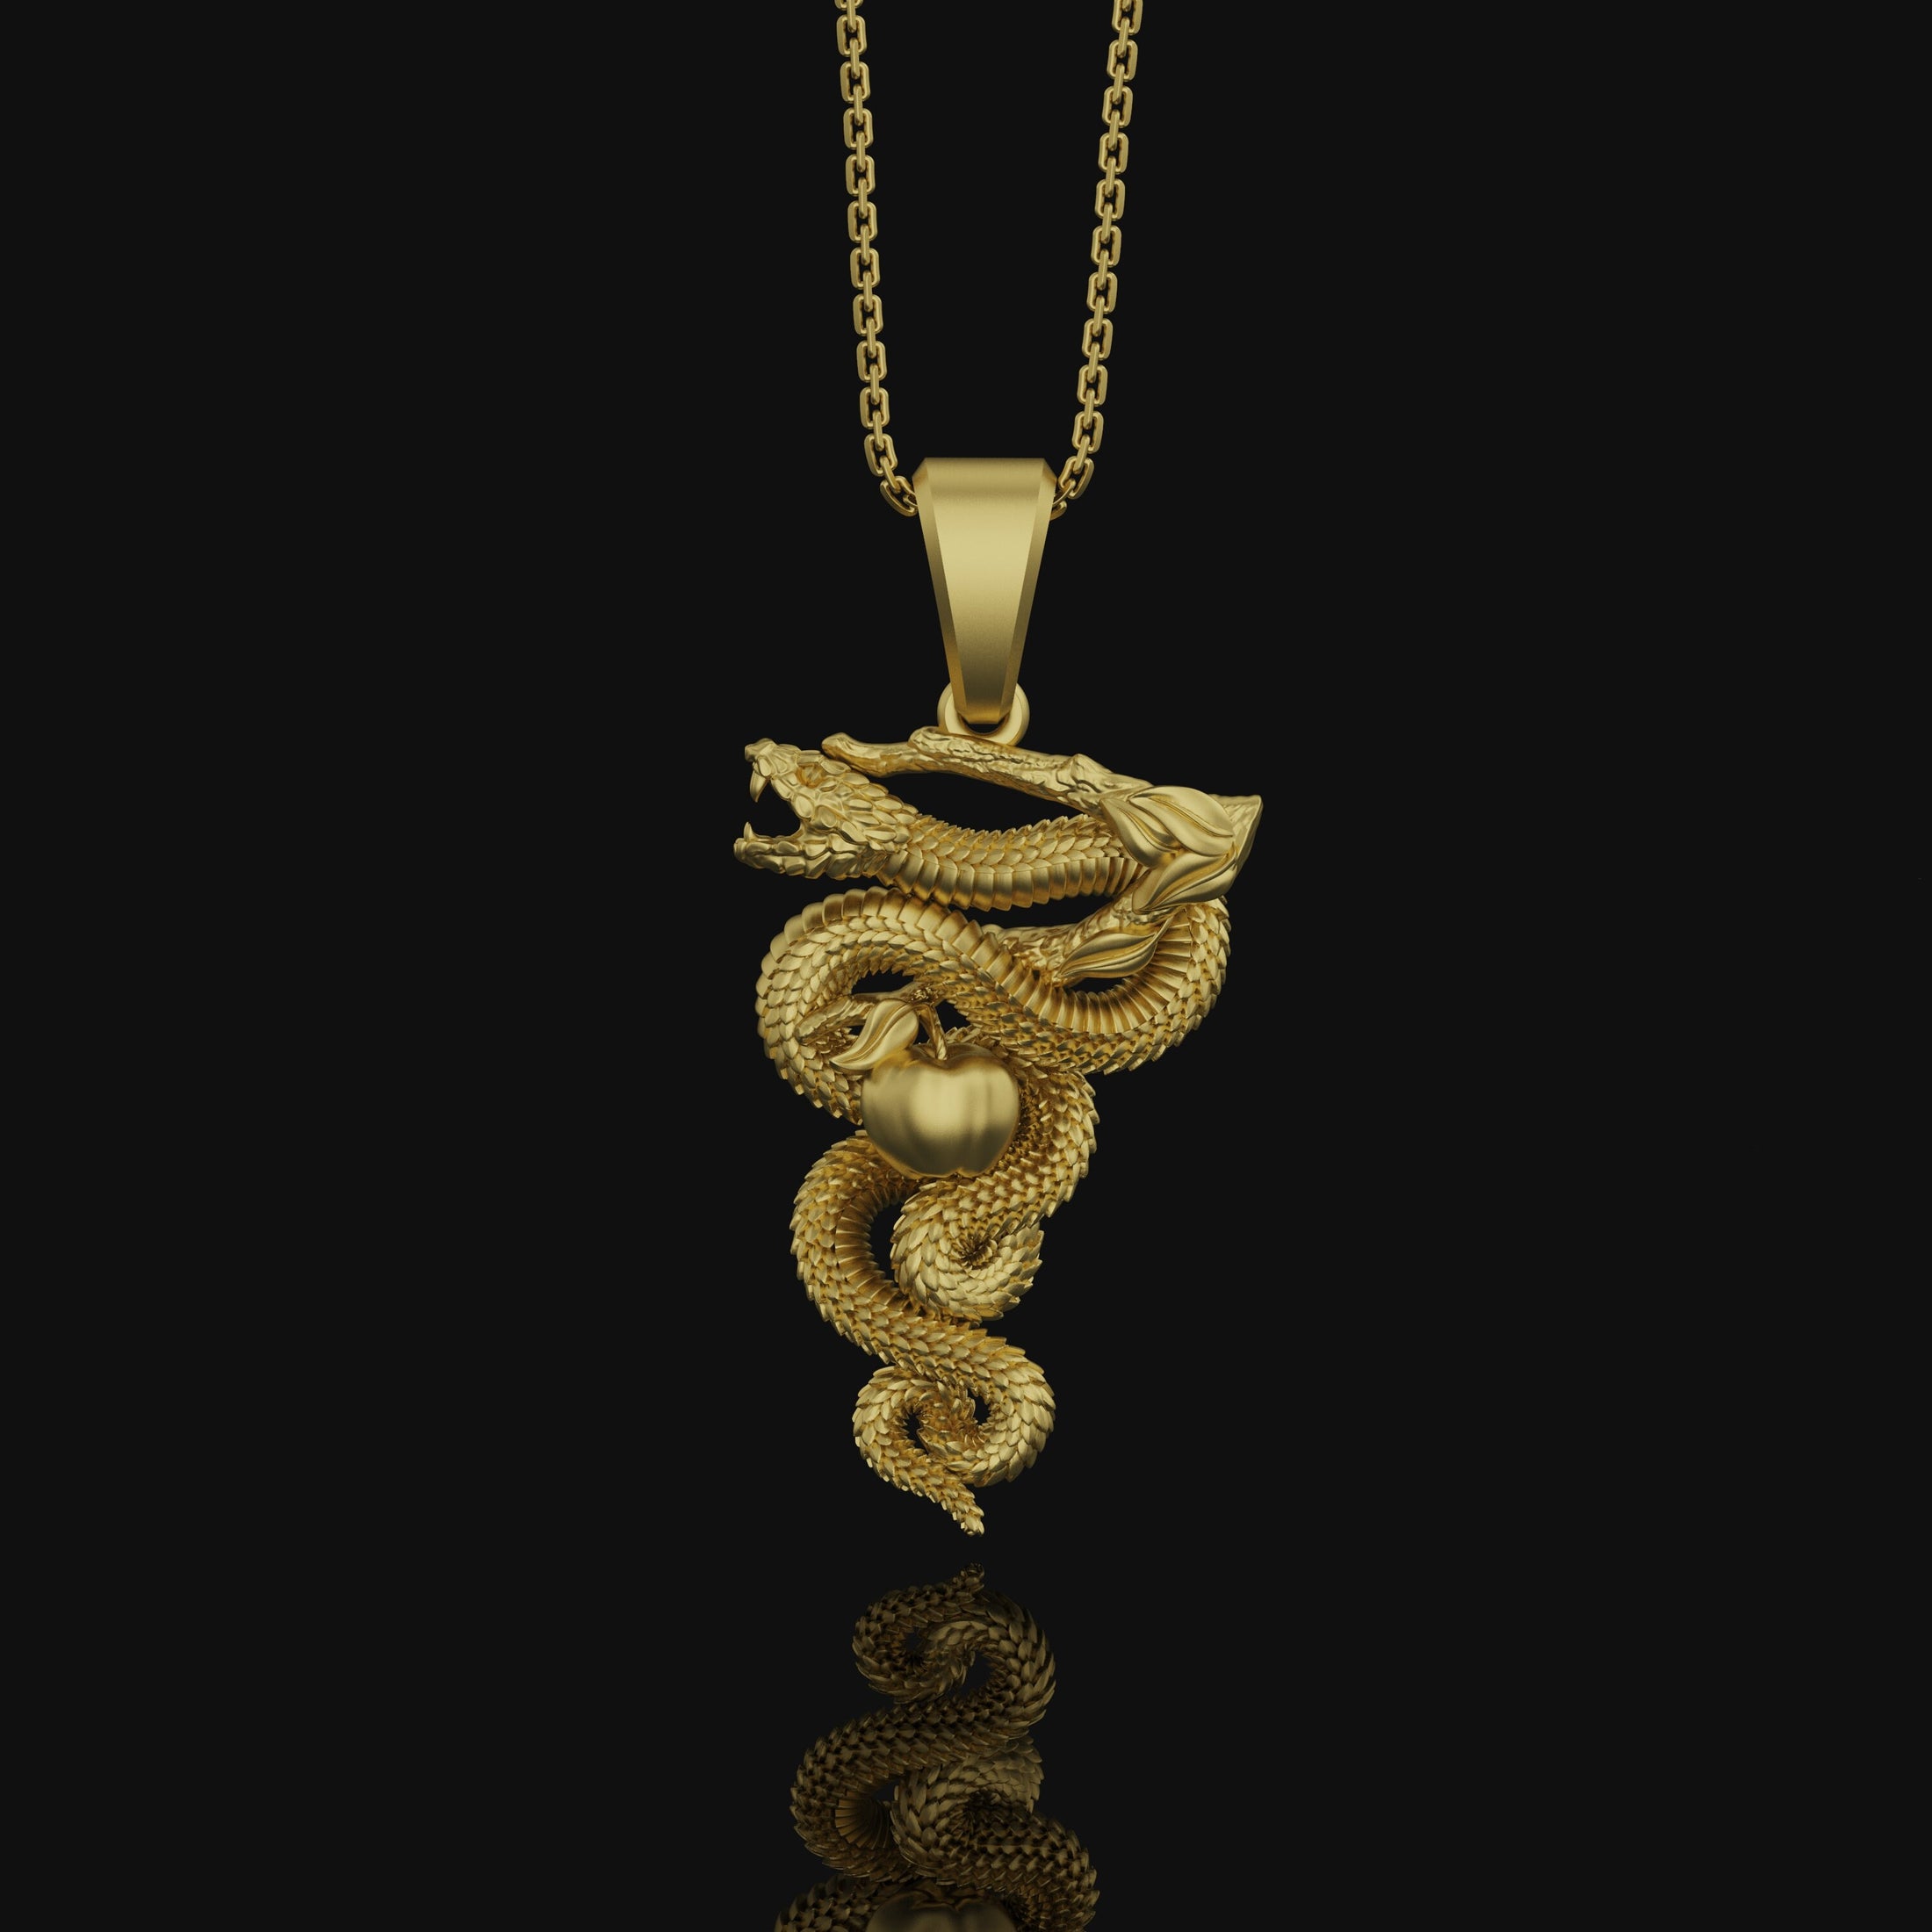 Eden Serpent Necklace - Adam and Eve Snake Pendant, Biblical Forbidden Fruit Jewelry, Spiritual Gift